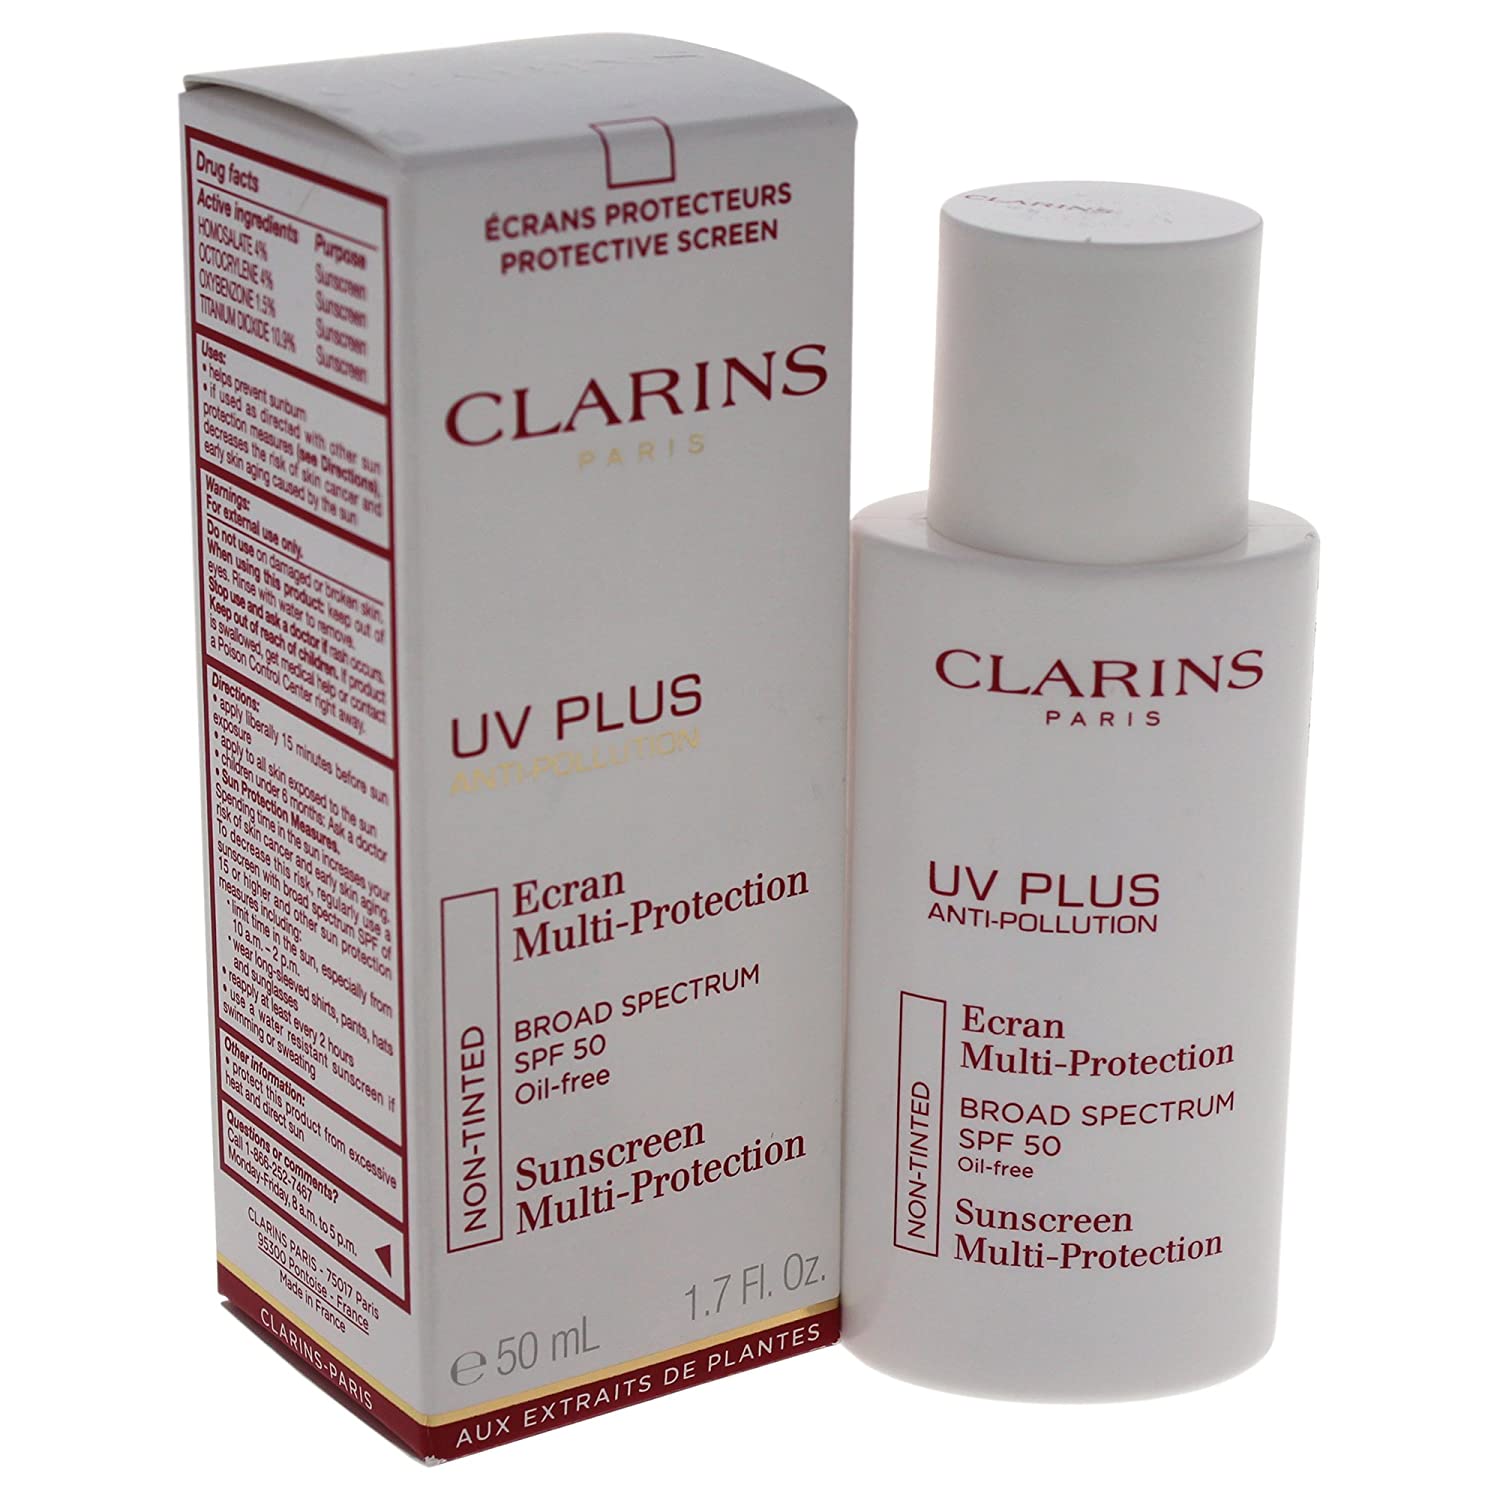 Clarins Uv Plus HP Anti-pollution SUNSCREEN Non-Tinted SPF 50